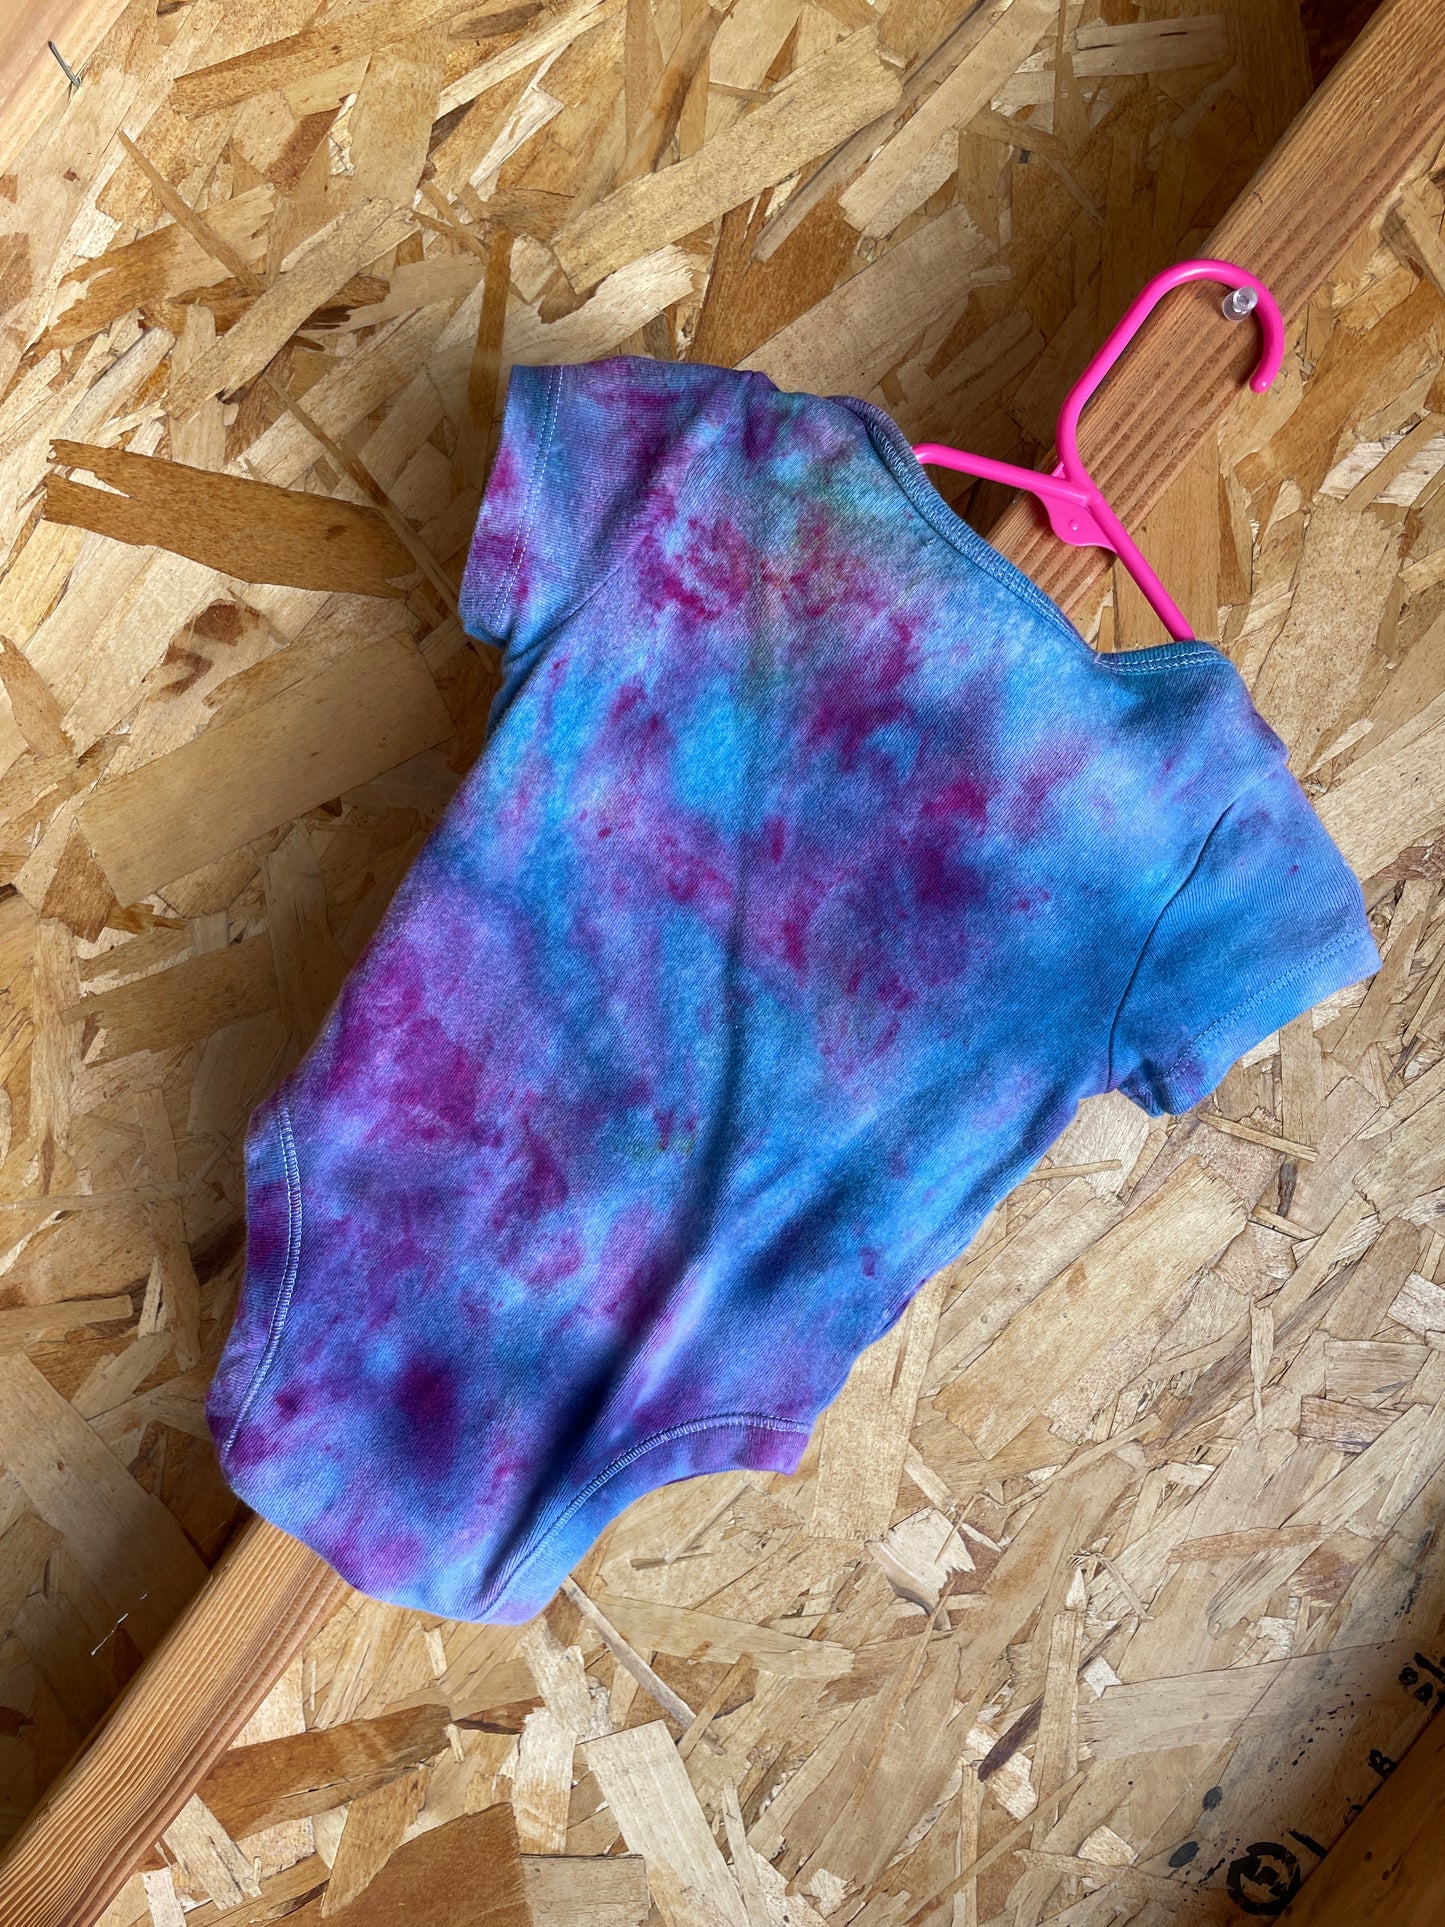 6-12 MONTHS Short Sleeve Baby Onesie | Handmade Tie Dye Cotton Onesie | Galaxy Ice Dyed Baby clothing